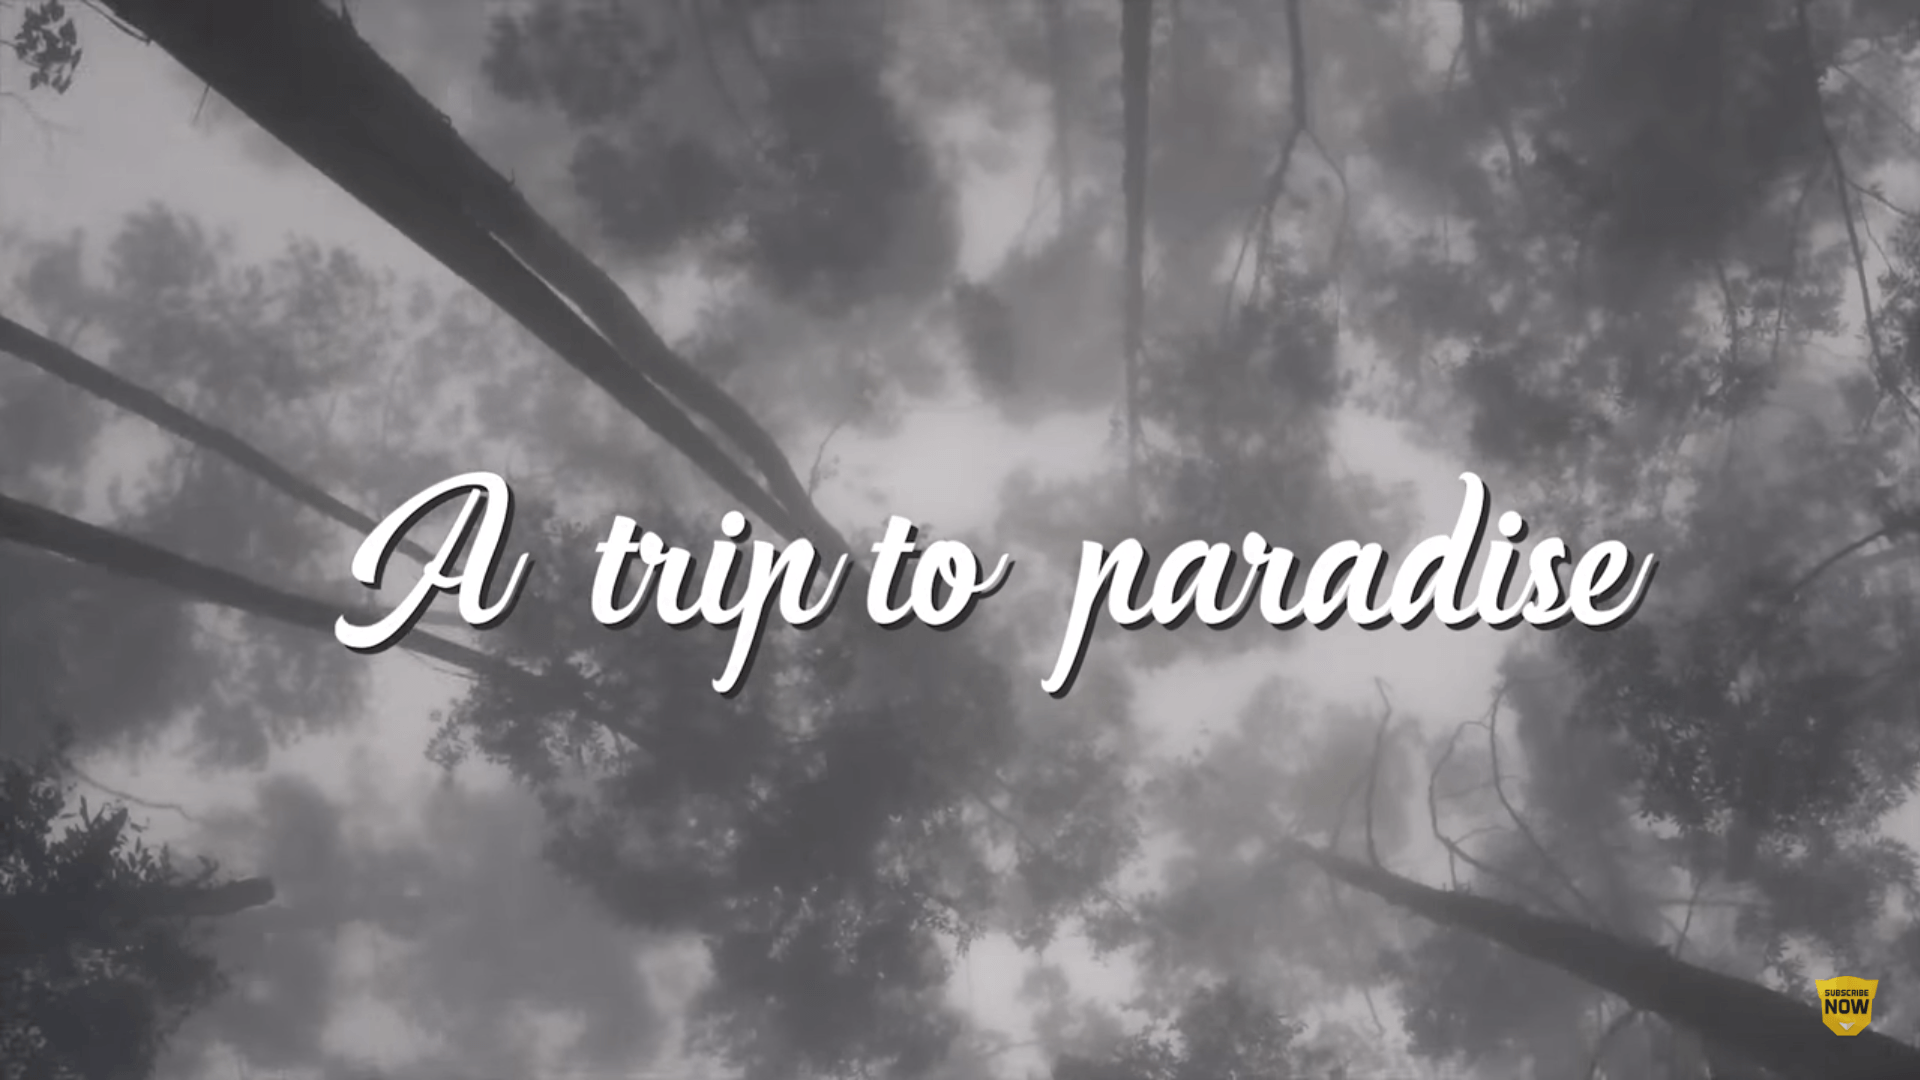 Vattakanal Kodaikanal – A trip to paradise Tripjodi Travel Video Part -2